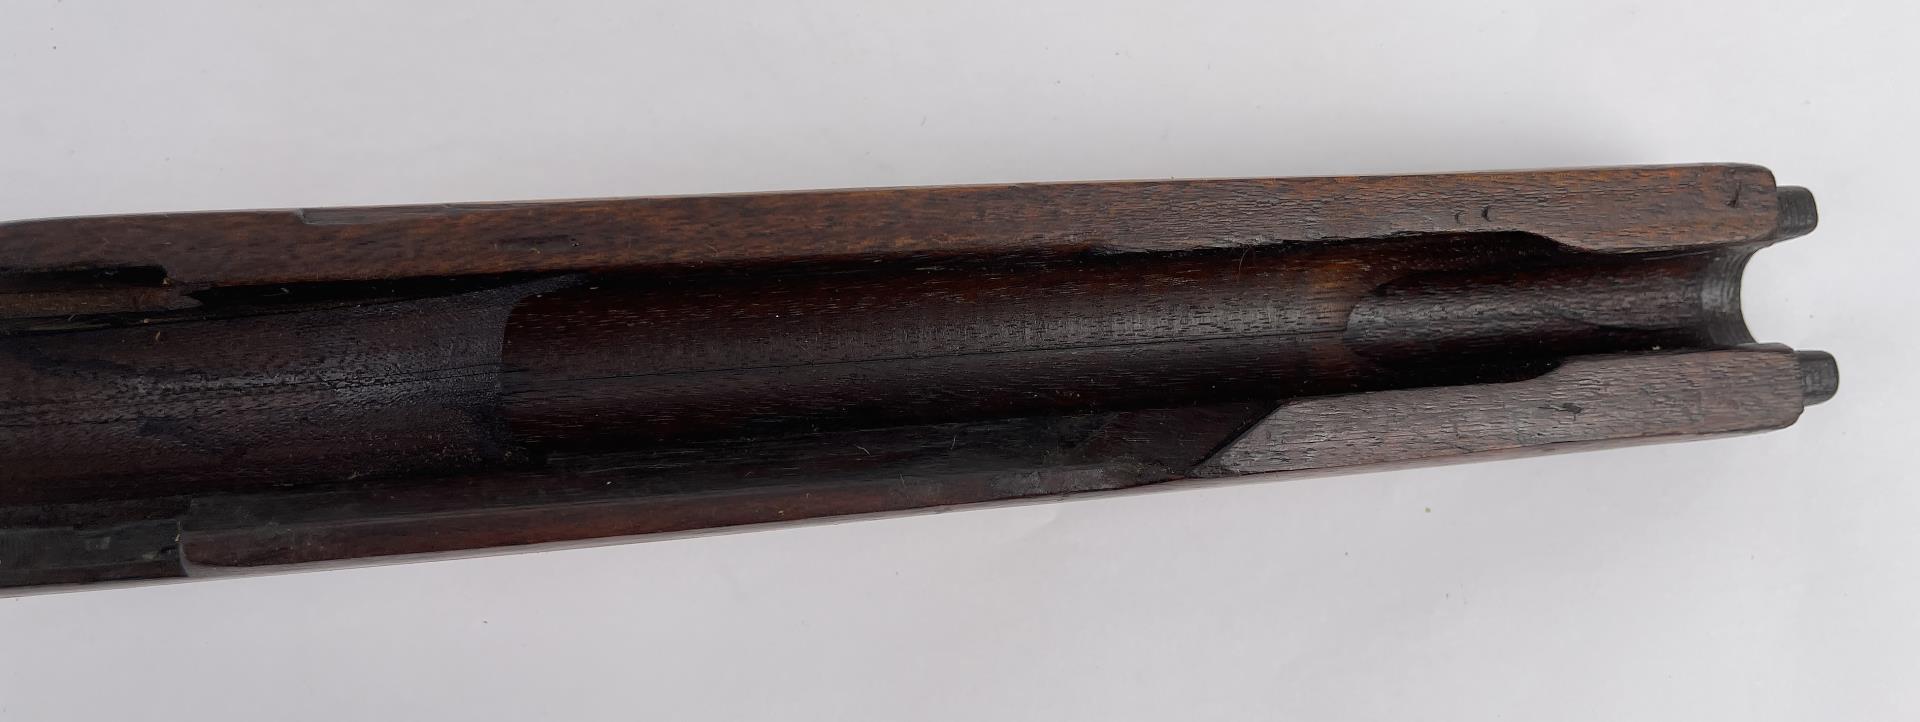 M1 Garand Wood Rifle Stock